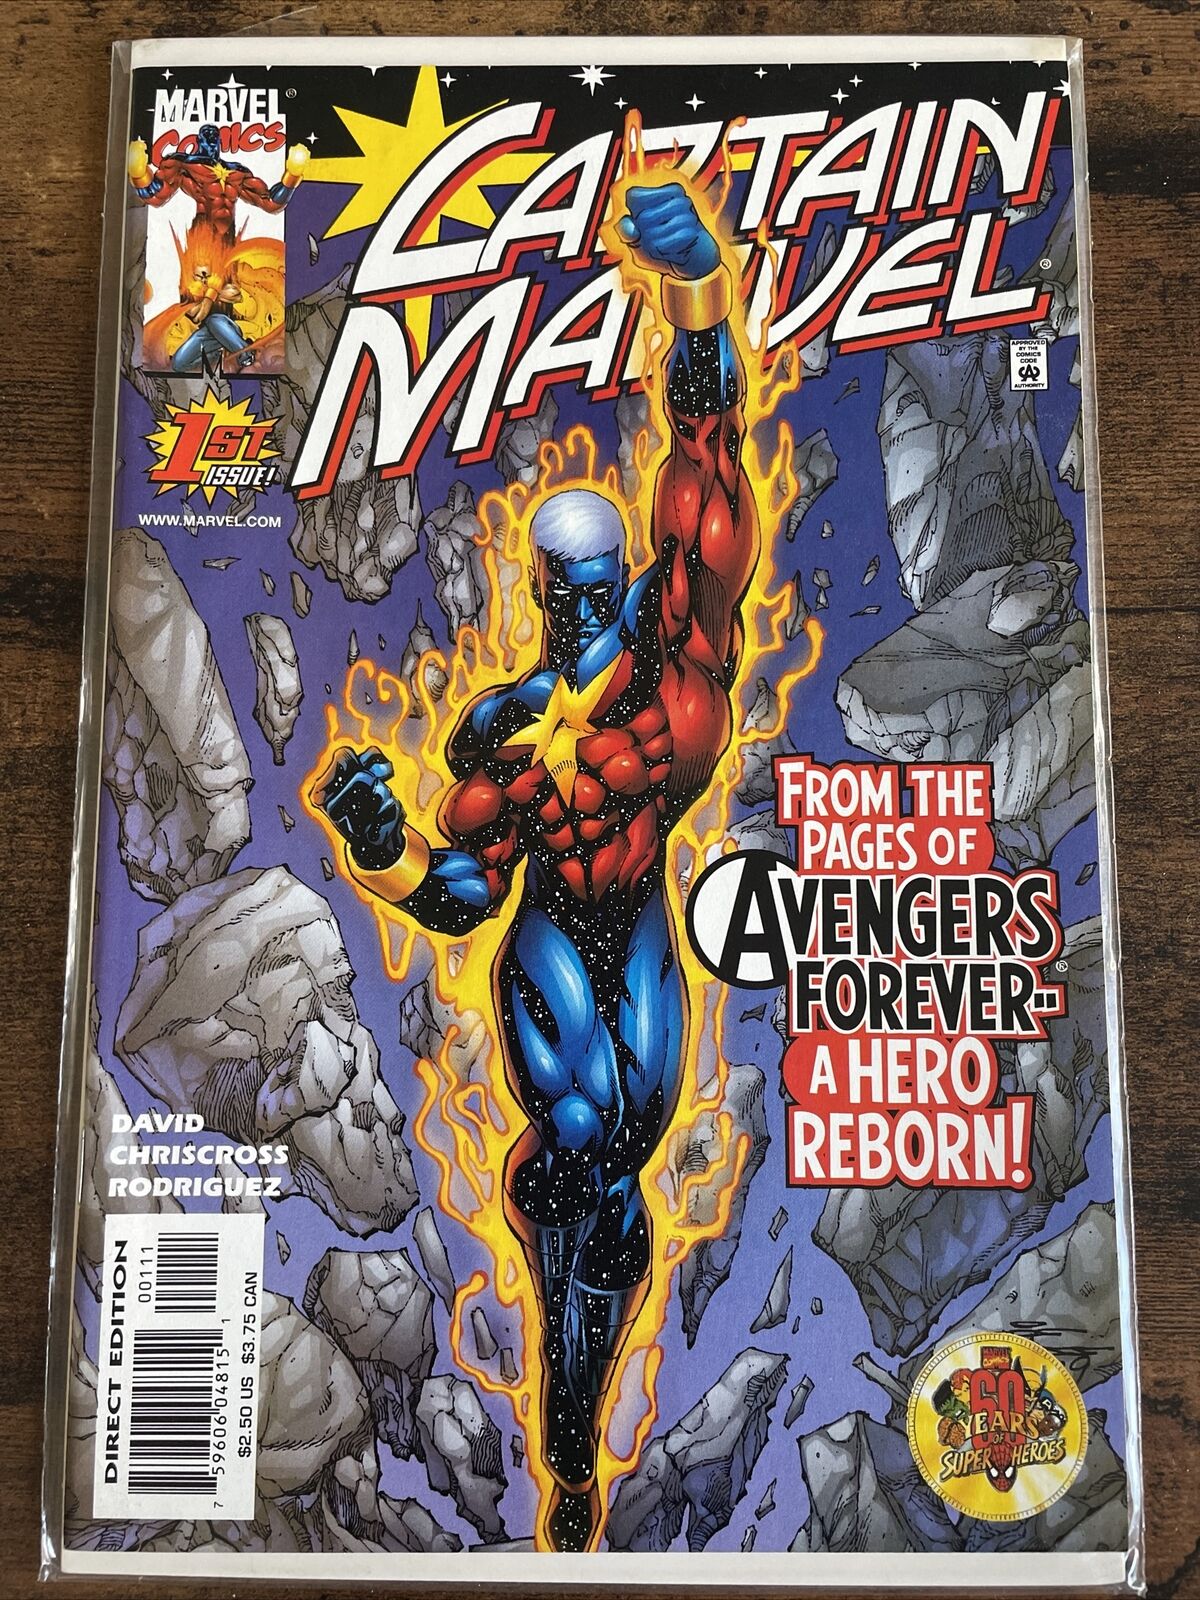 Captain Marvel #1 (Marvel Comics January 2000)